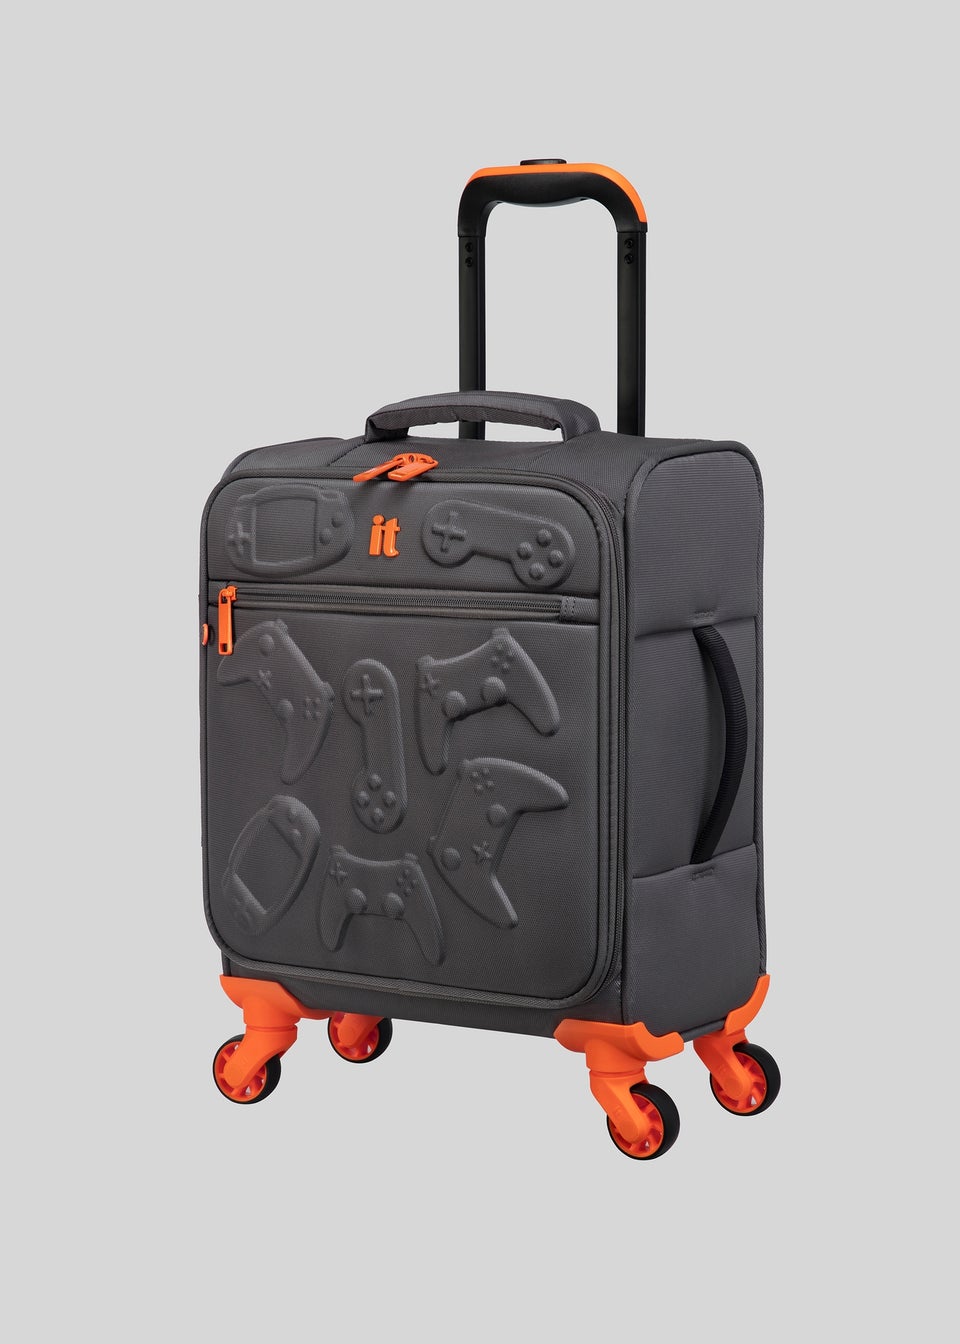 IT Luggage Grey Gaming Suitcase (44.5cm x 33.5cm x 20cm)